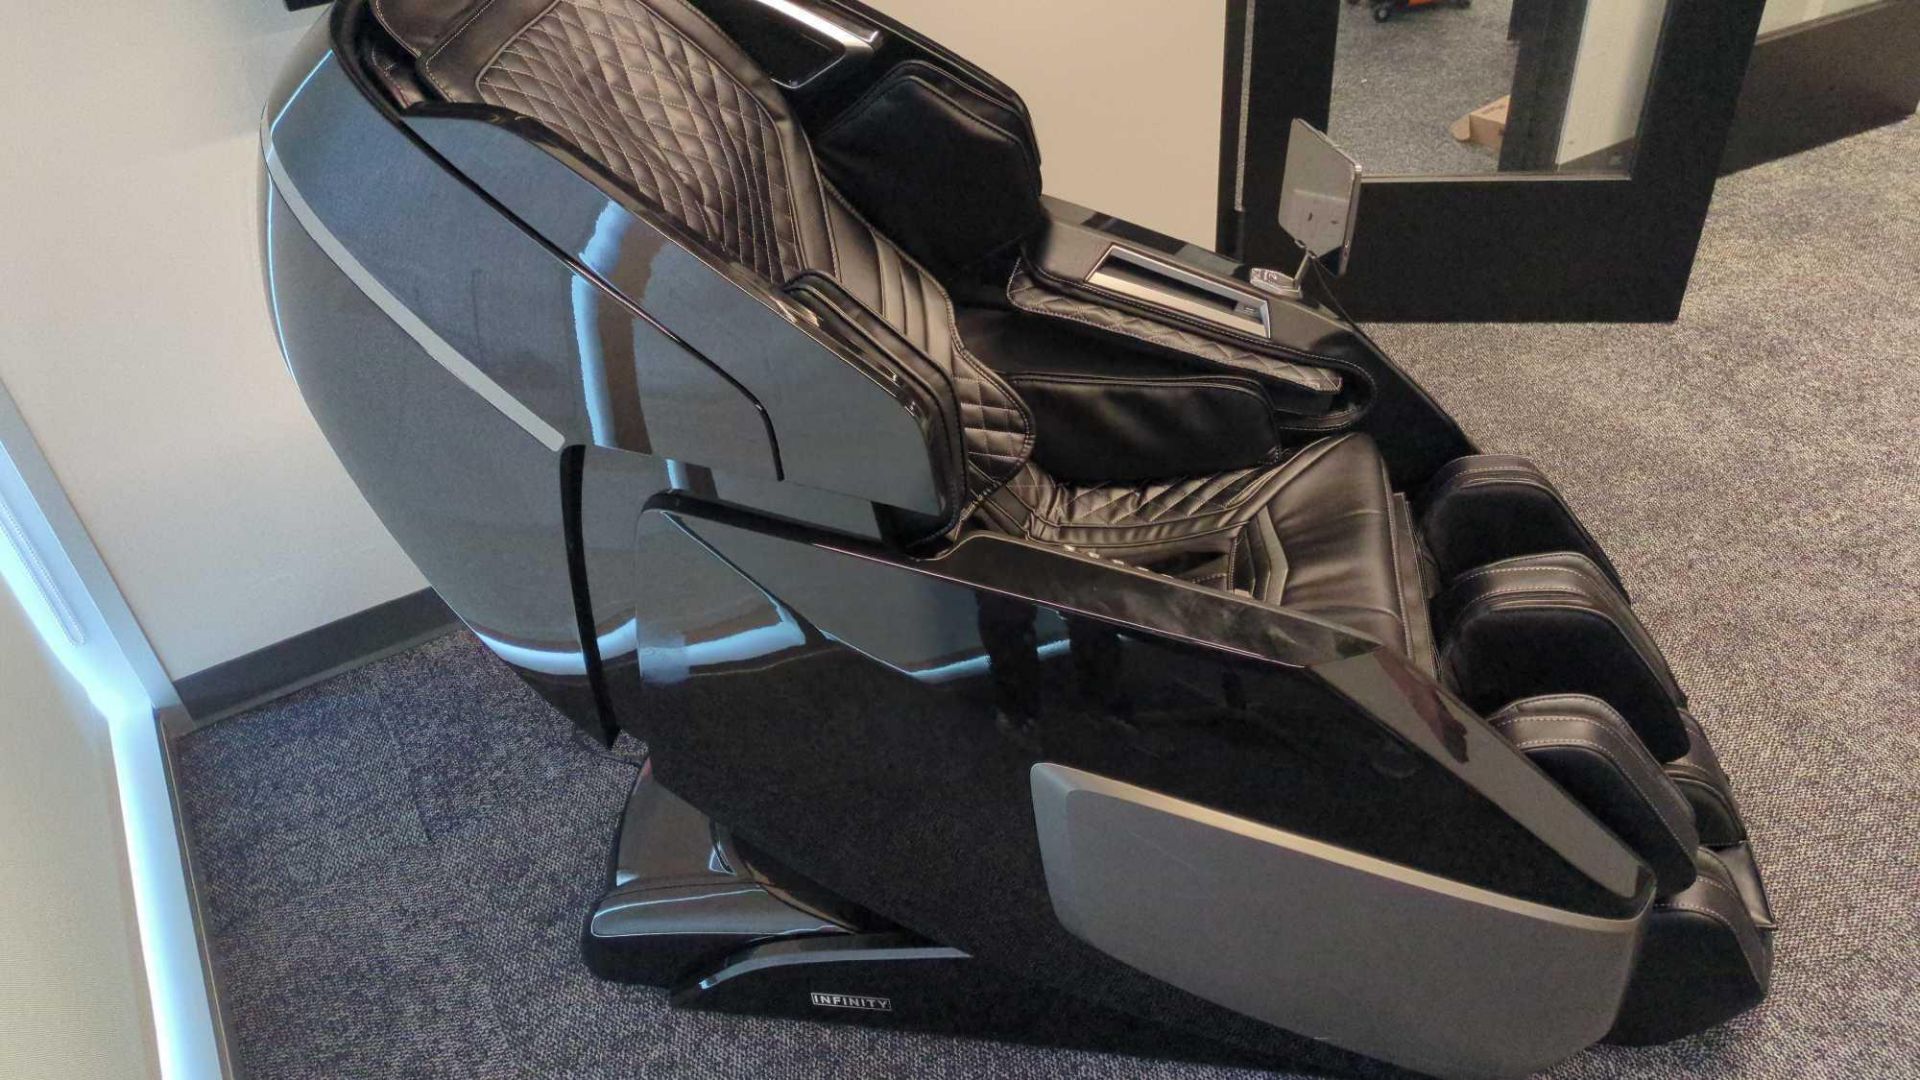 Infiniti massage chair, circadian model - Image 2 of 9